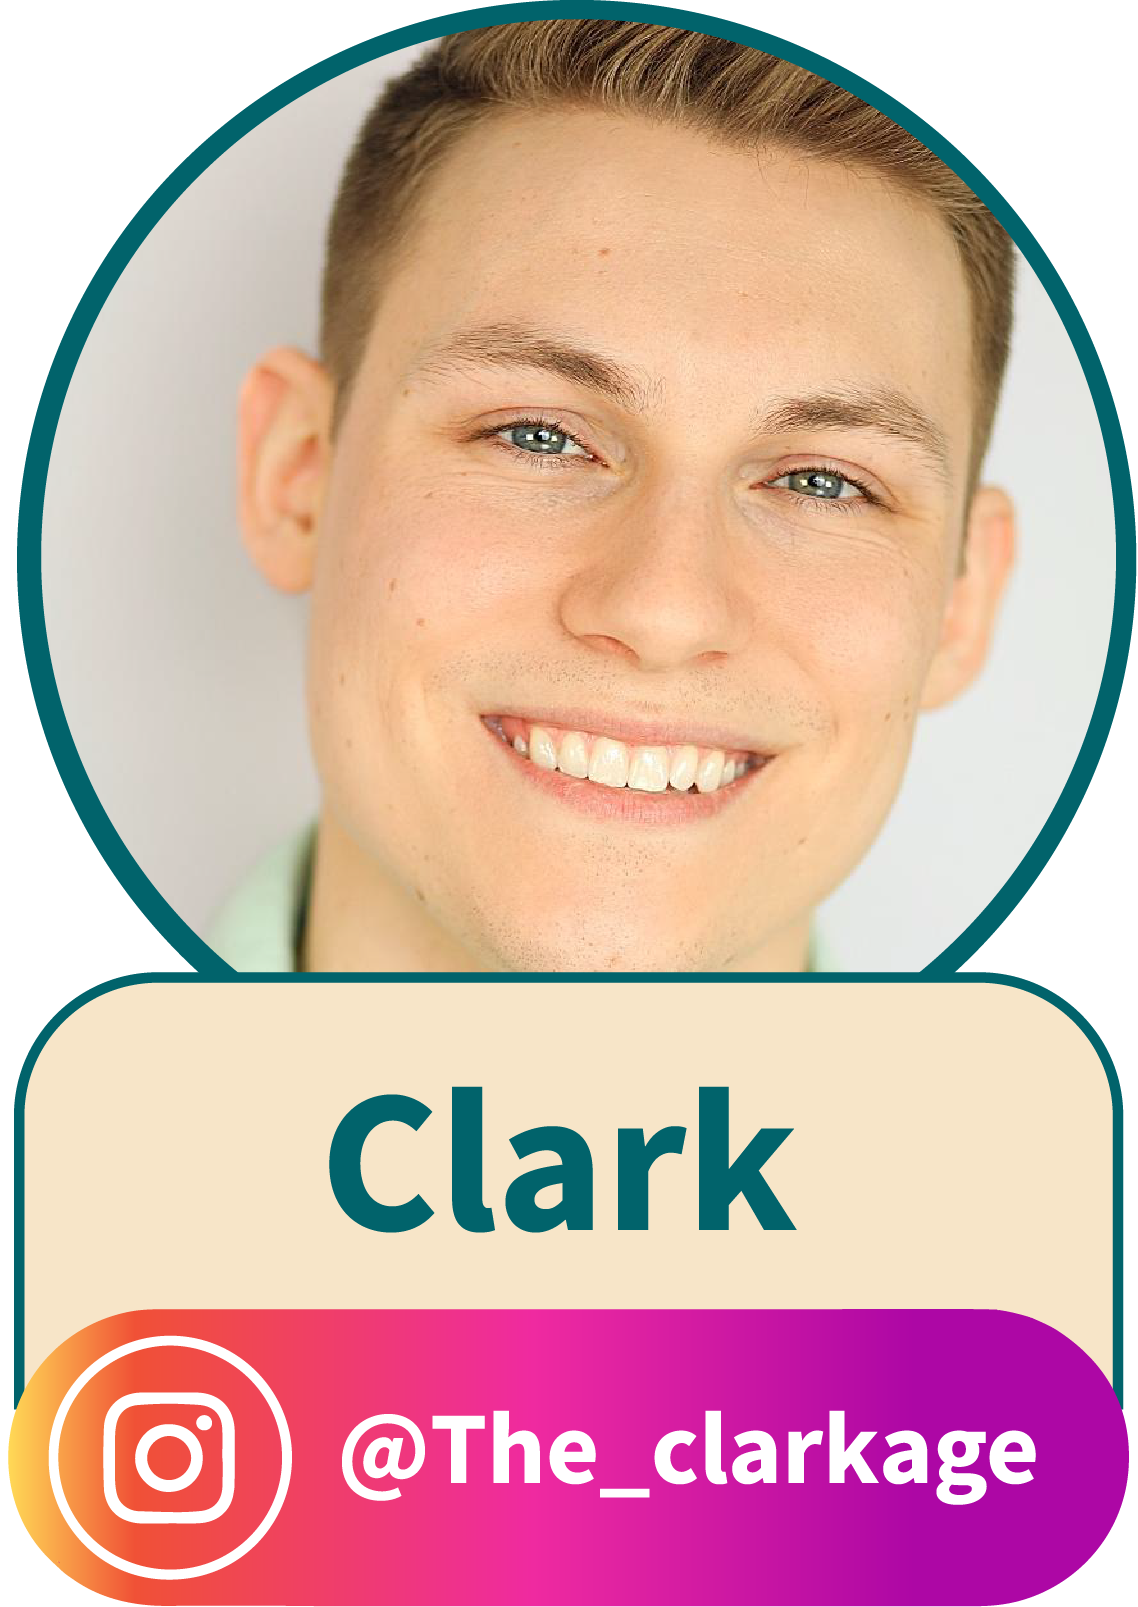 Clark image